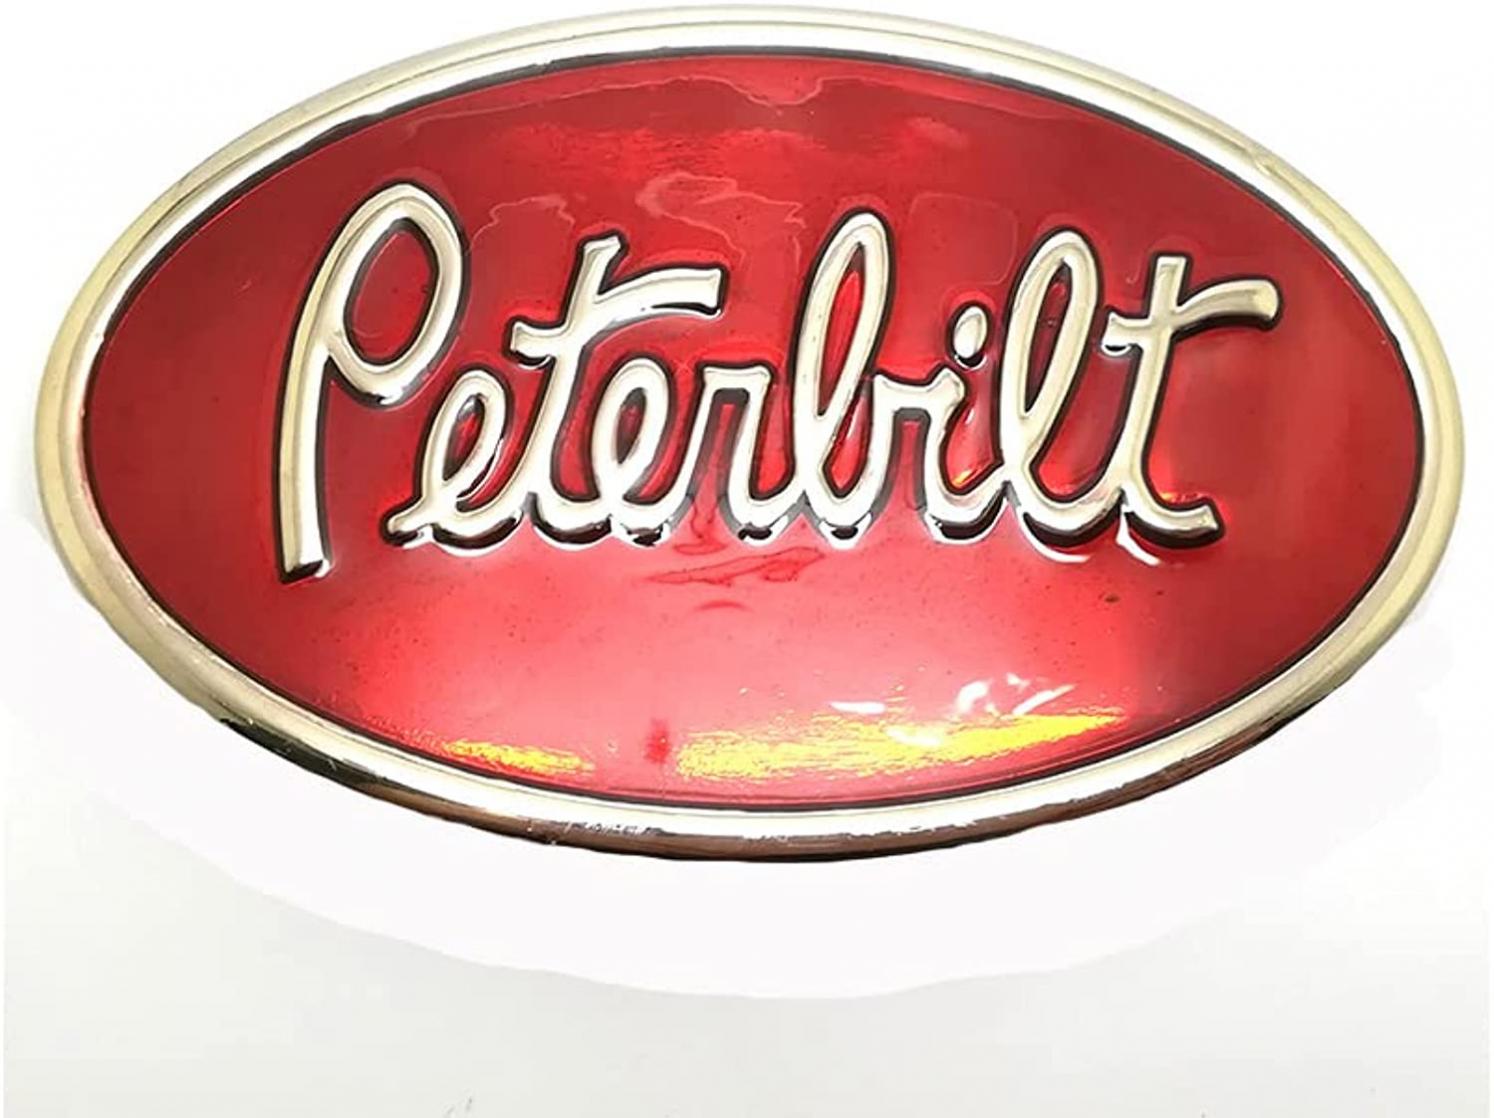 TotalShop Peterbilt Chrome Red Motors Belt Buckle